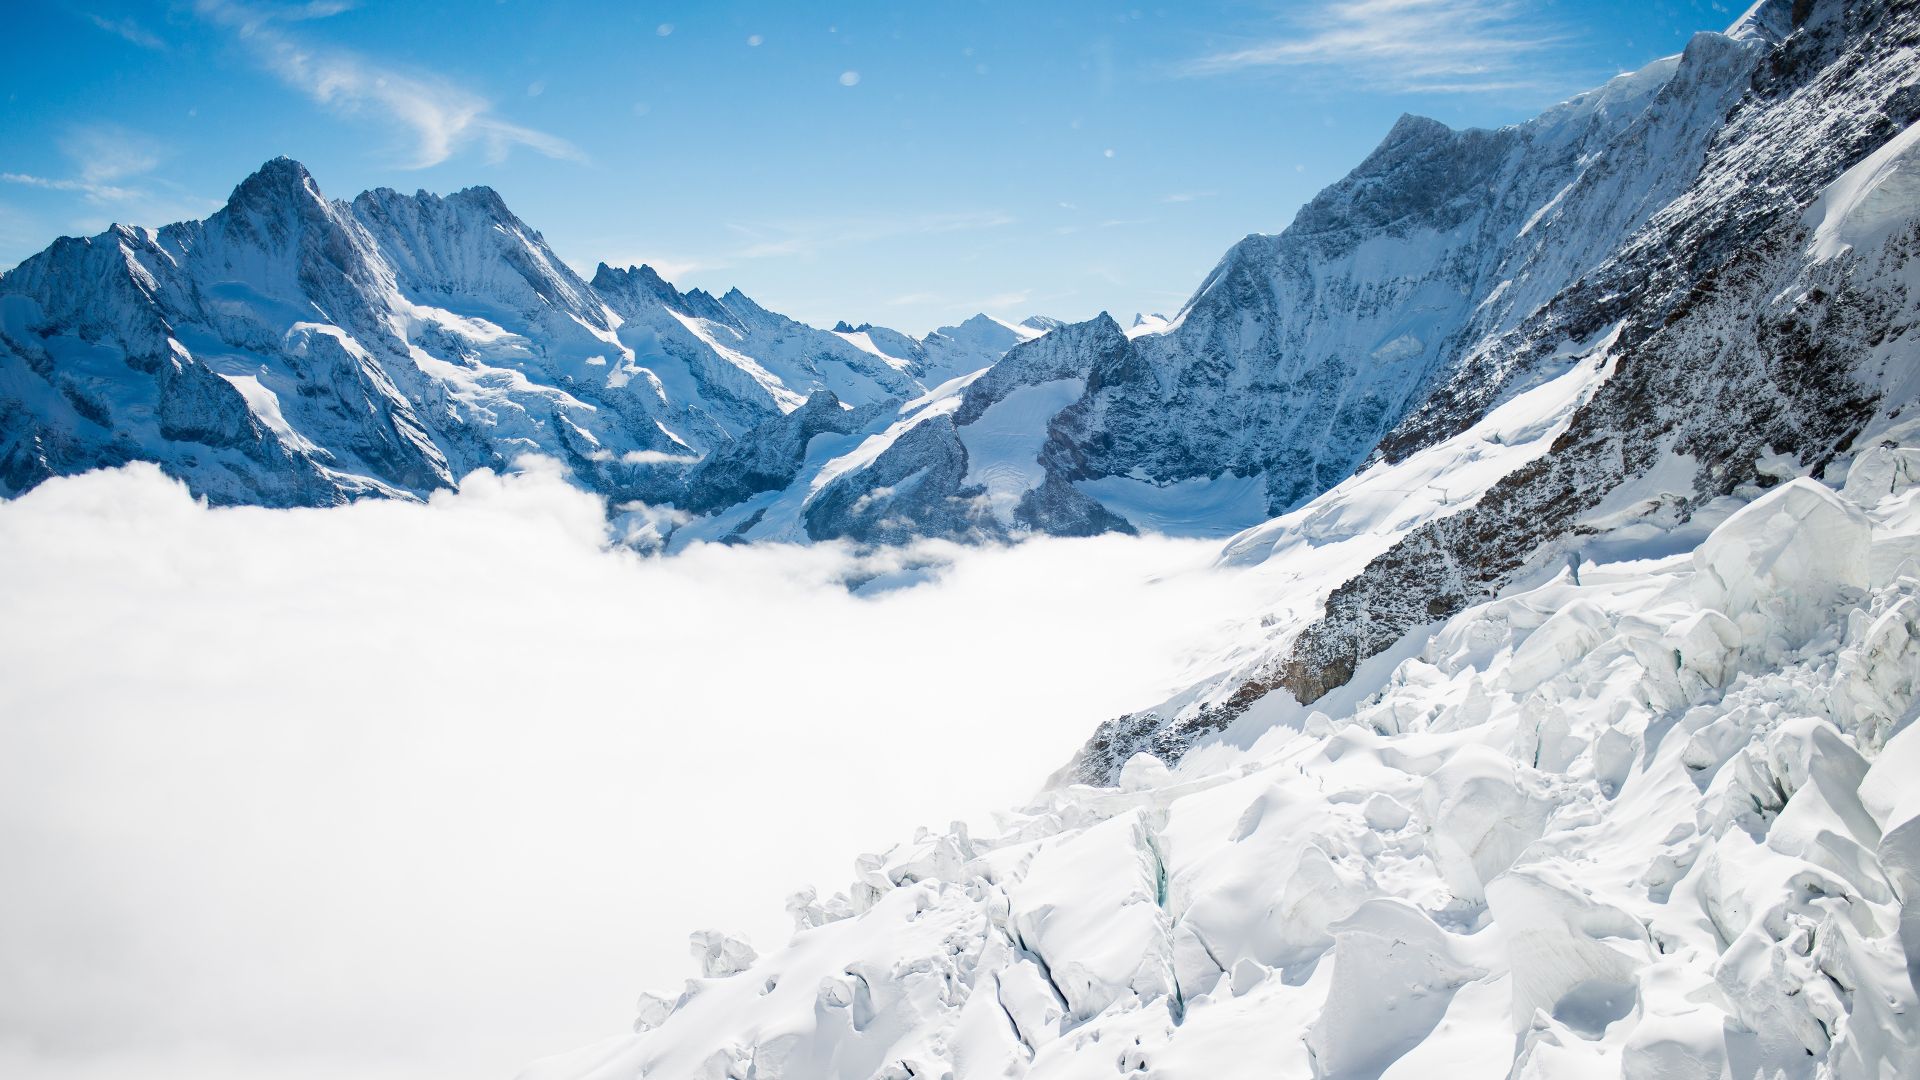 Bernese Alps, mountain, Switzerland, snow, winter, sky, clouds, 4k (horizontal)